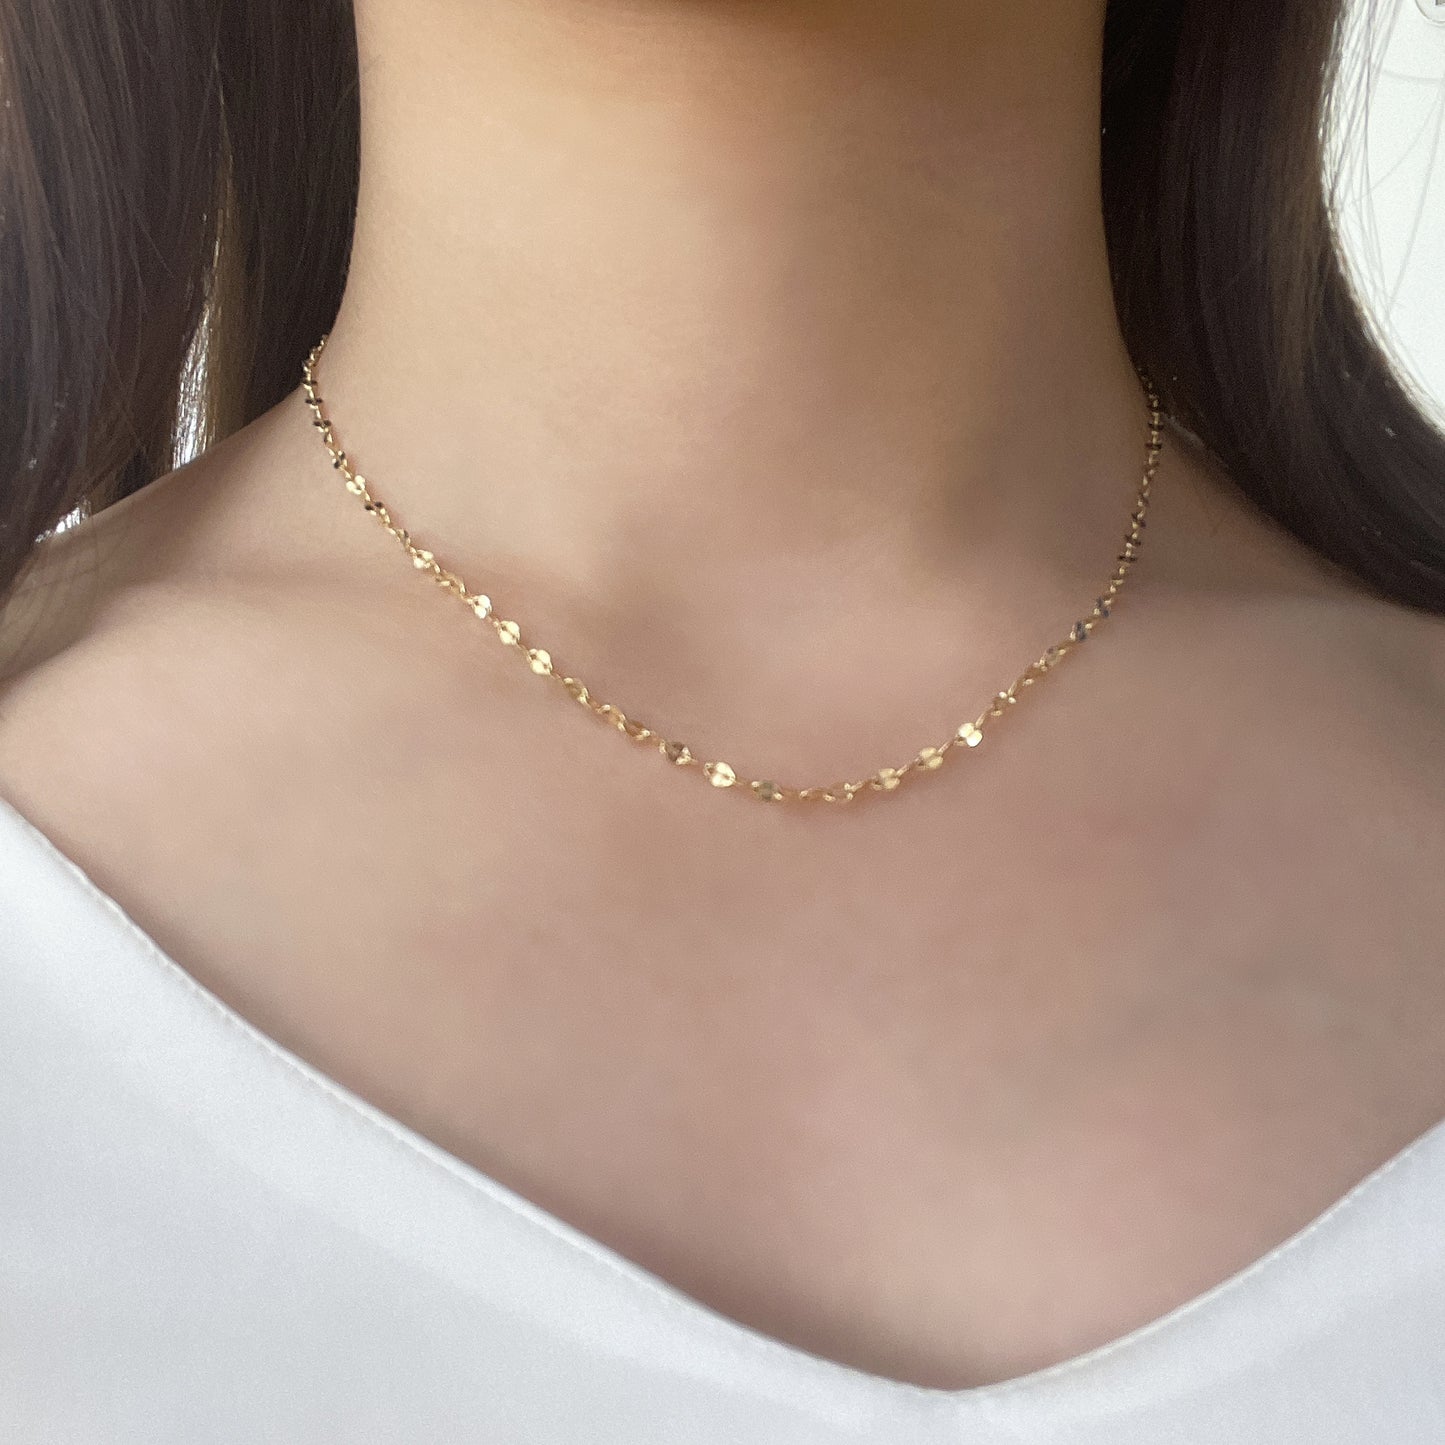 18k黃金嘴唇閃片頸鏈 18k Yellow Gold Adjustable Lip Chain Necklace